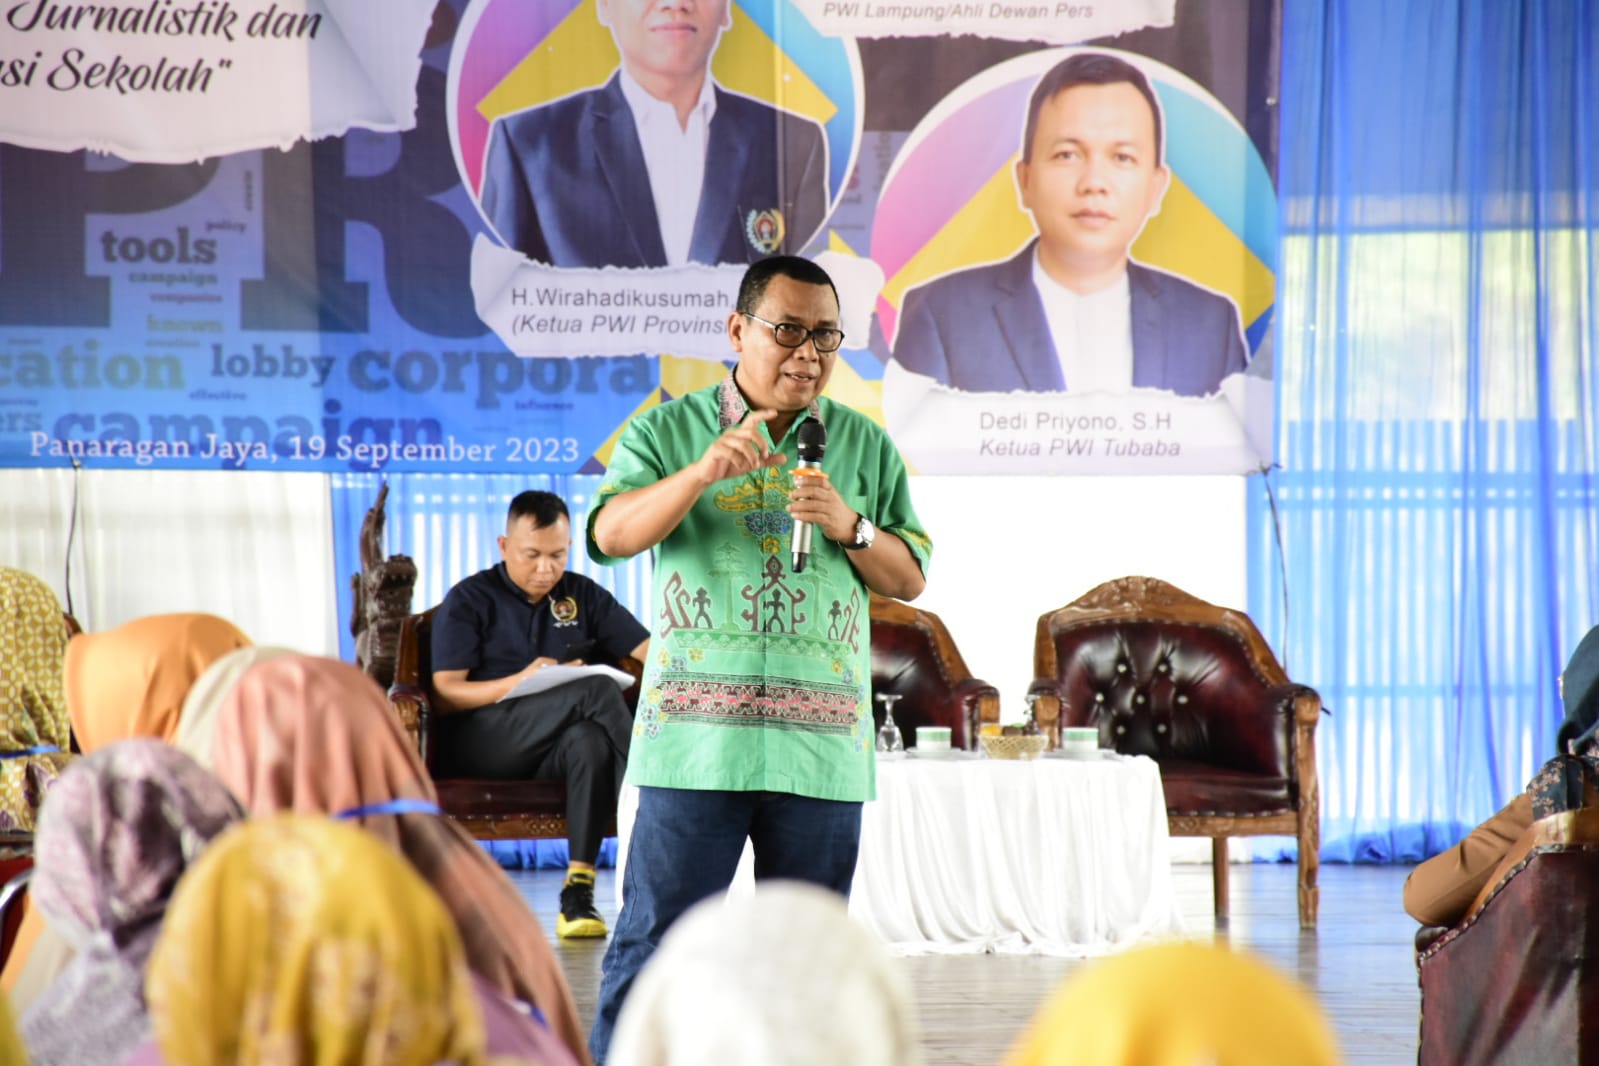 PWI Lampung Gelar Workshop Jurnalistik dan Kehumasan di Tubaba